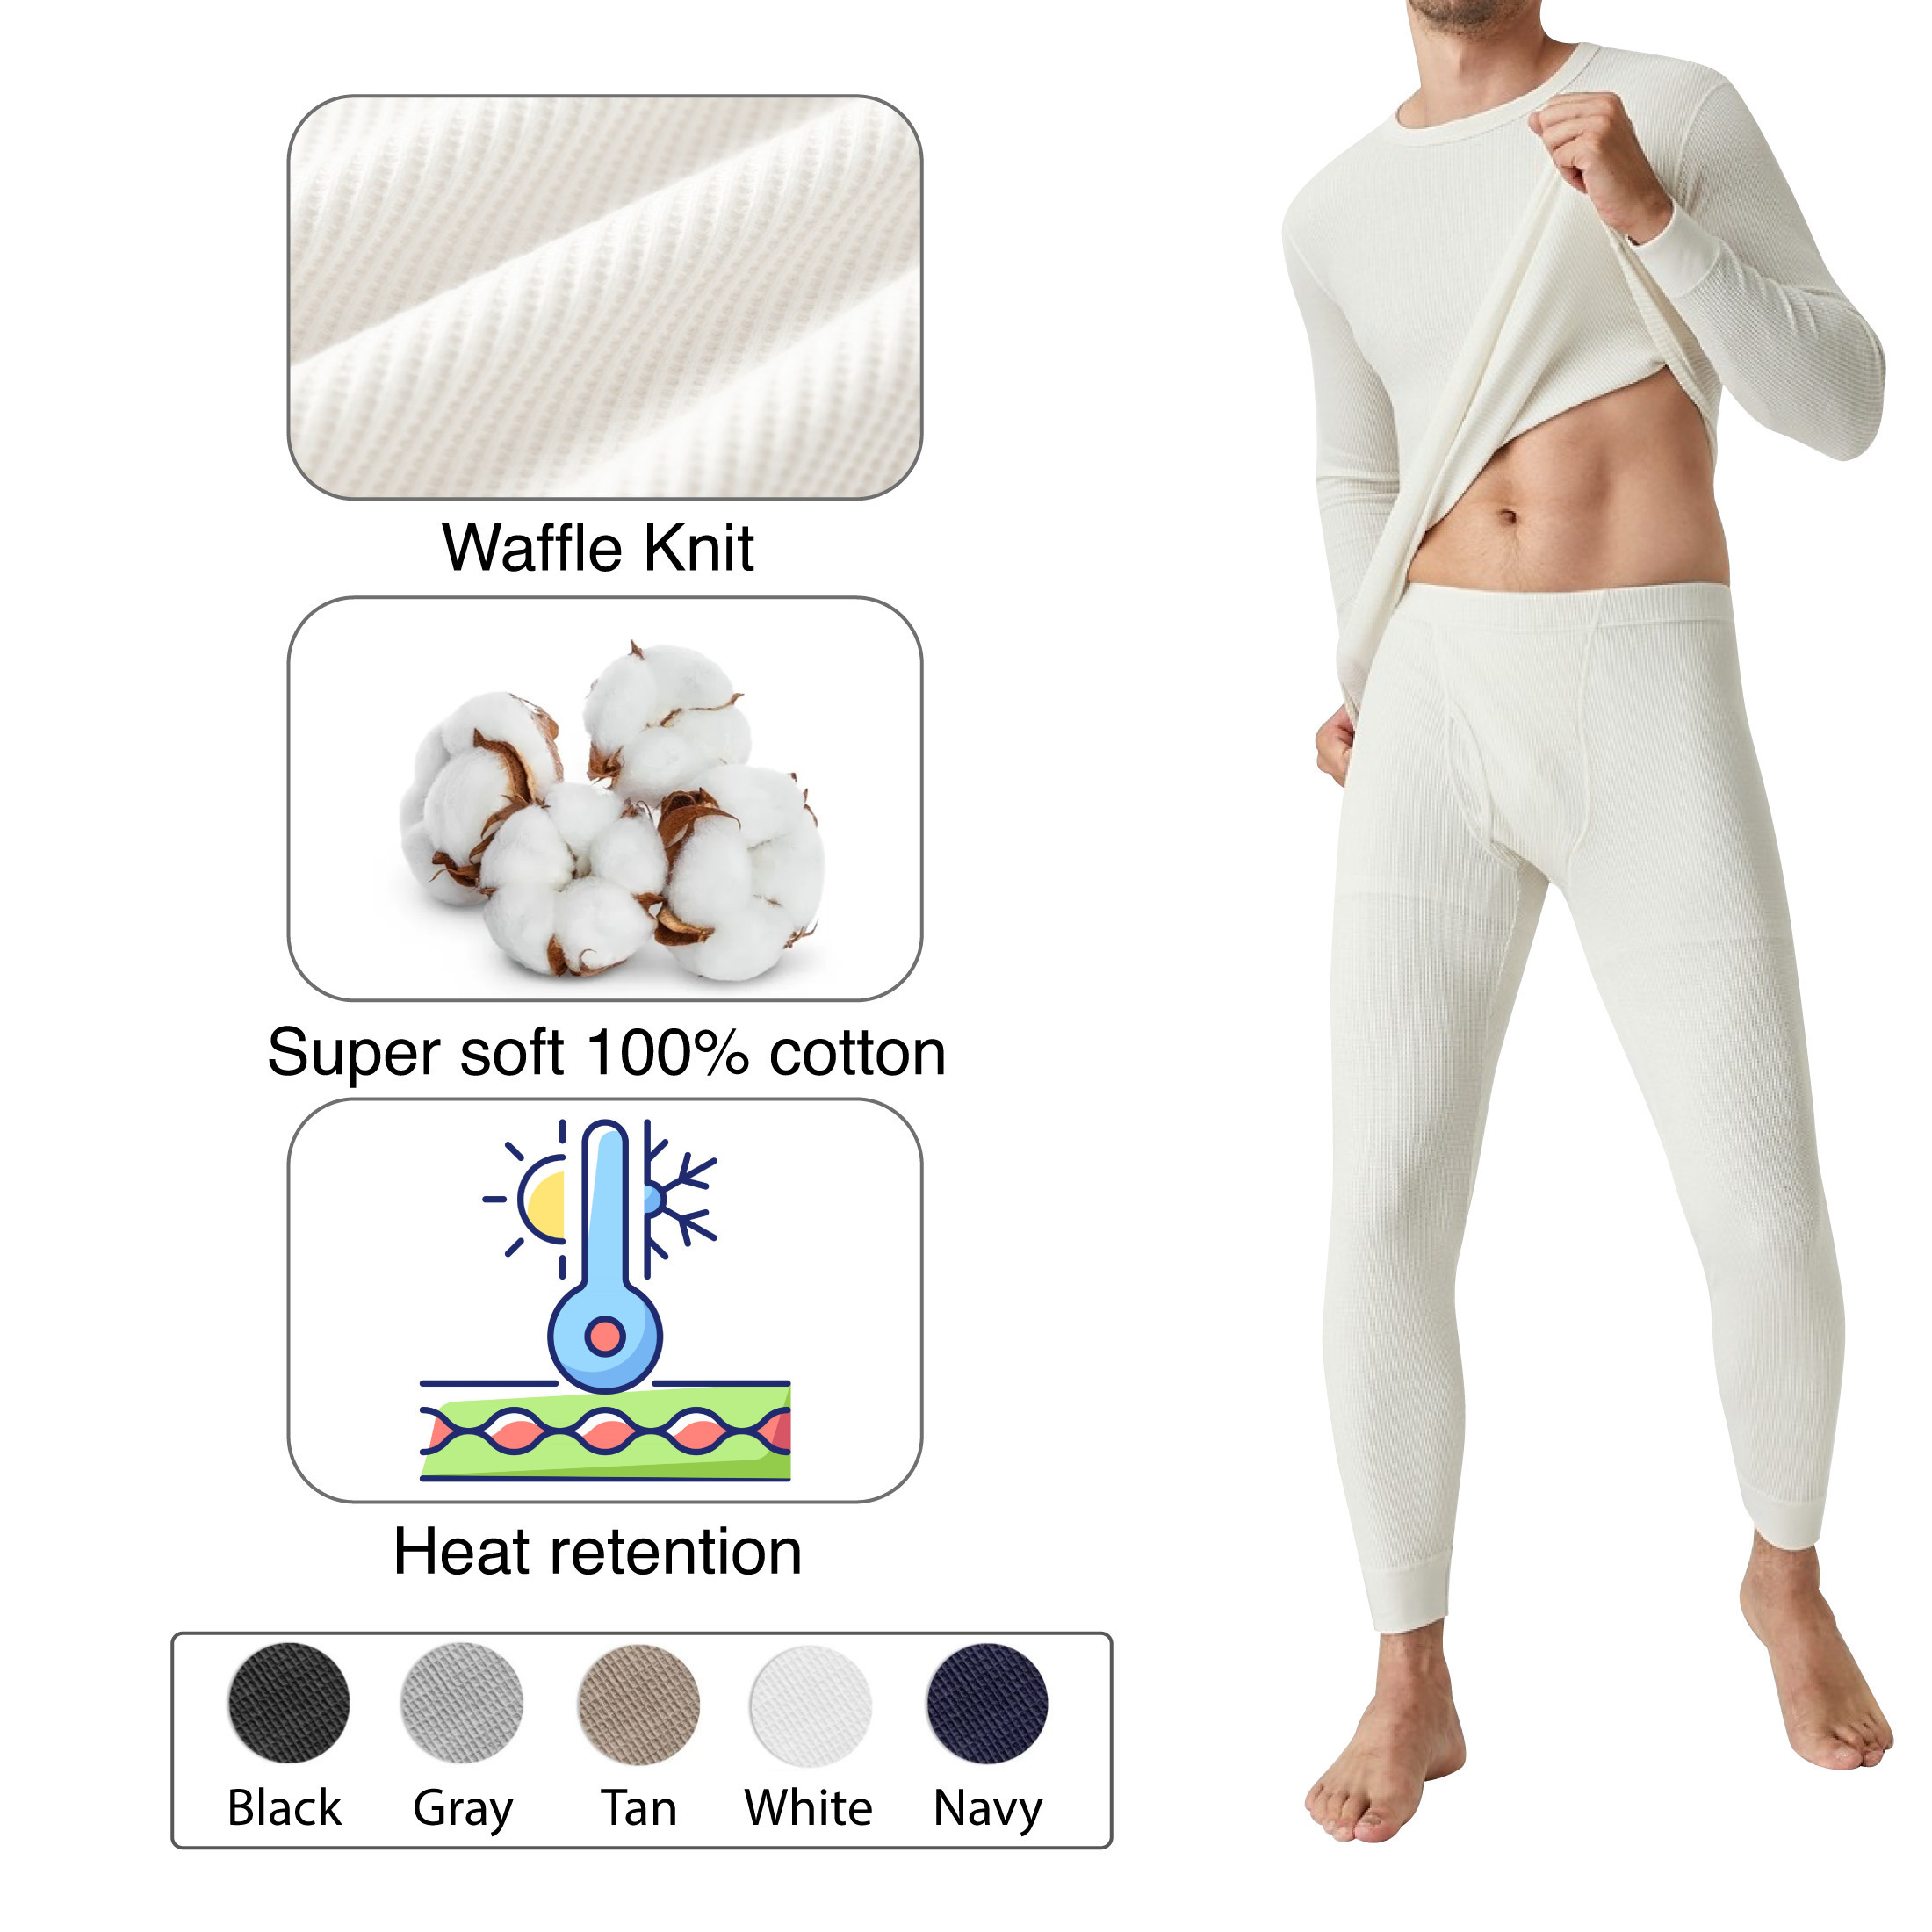 2-Piece: Men's Super Soft Cotton Waffle Knit Winter Thermal Underwear Set - White, X-Large